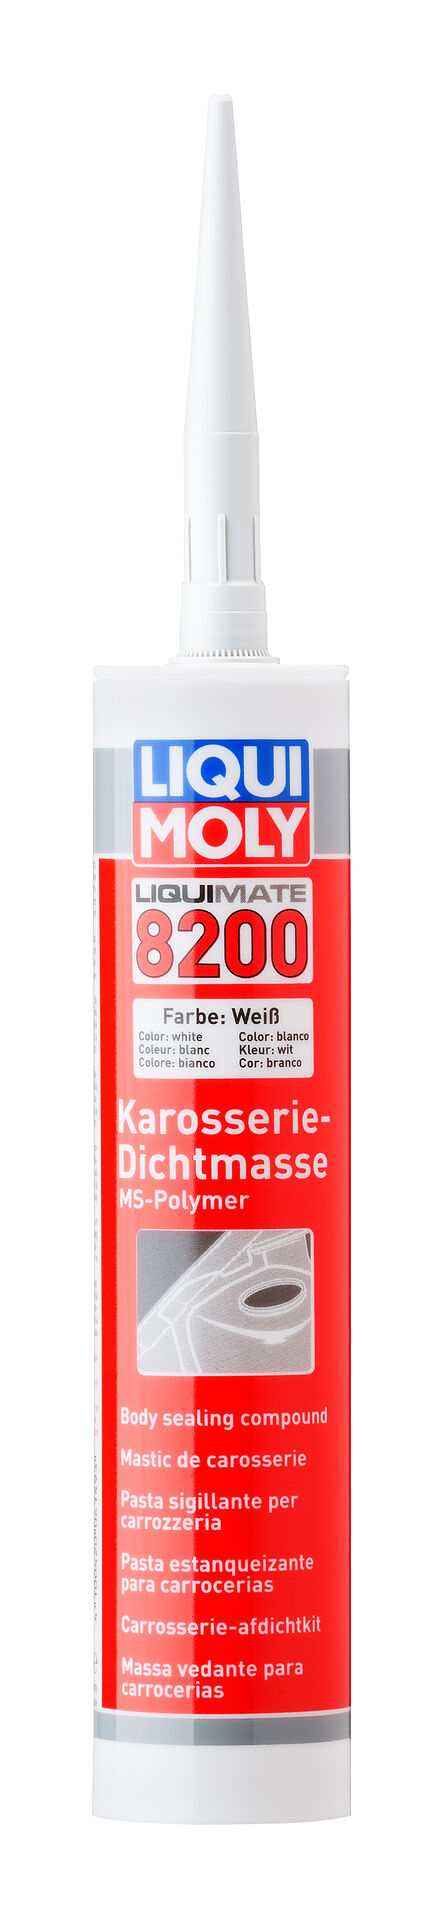 Liqui Moly Liquimate 8200 MS Polymer weiß Karosserie Dichtmasse 290 ml